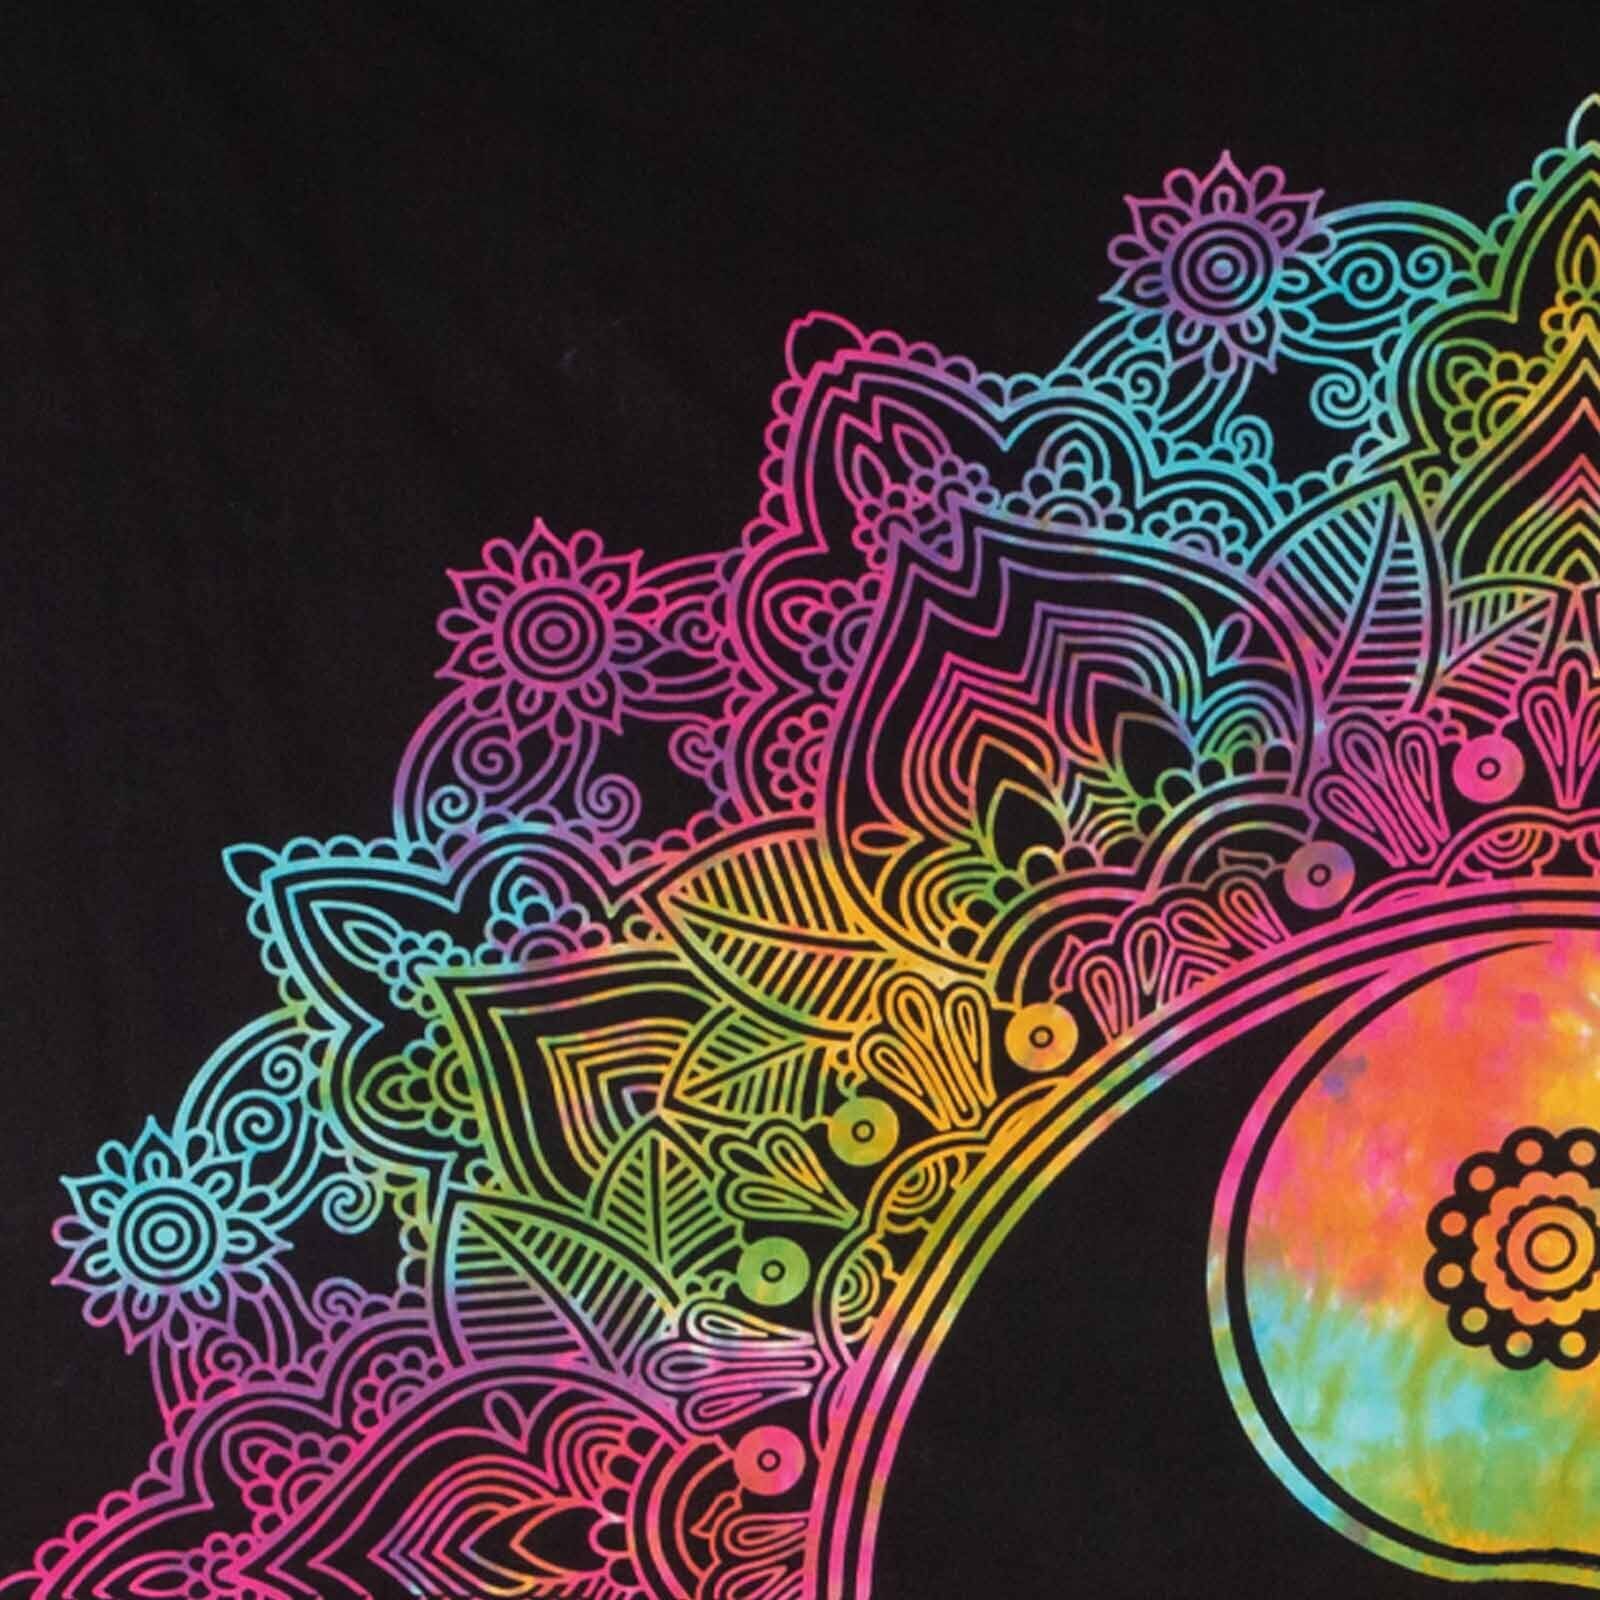 Wandbehang Tagesdecke Ying Yang Deko Goa Tuch Indien Mandala ca200x230cm Fair 